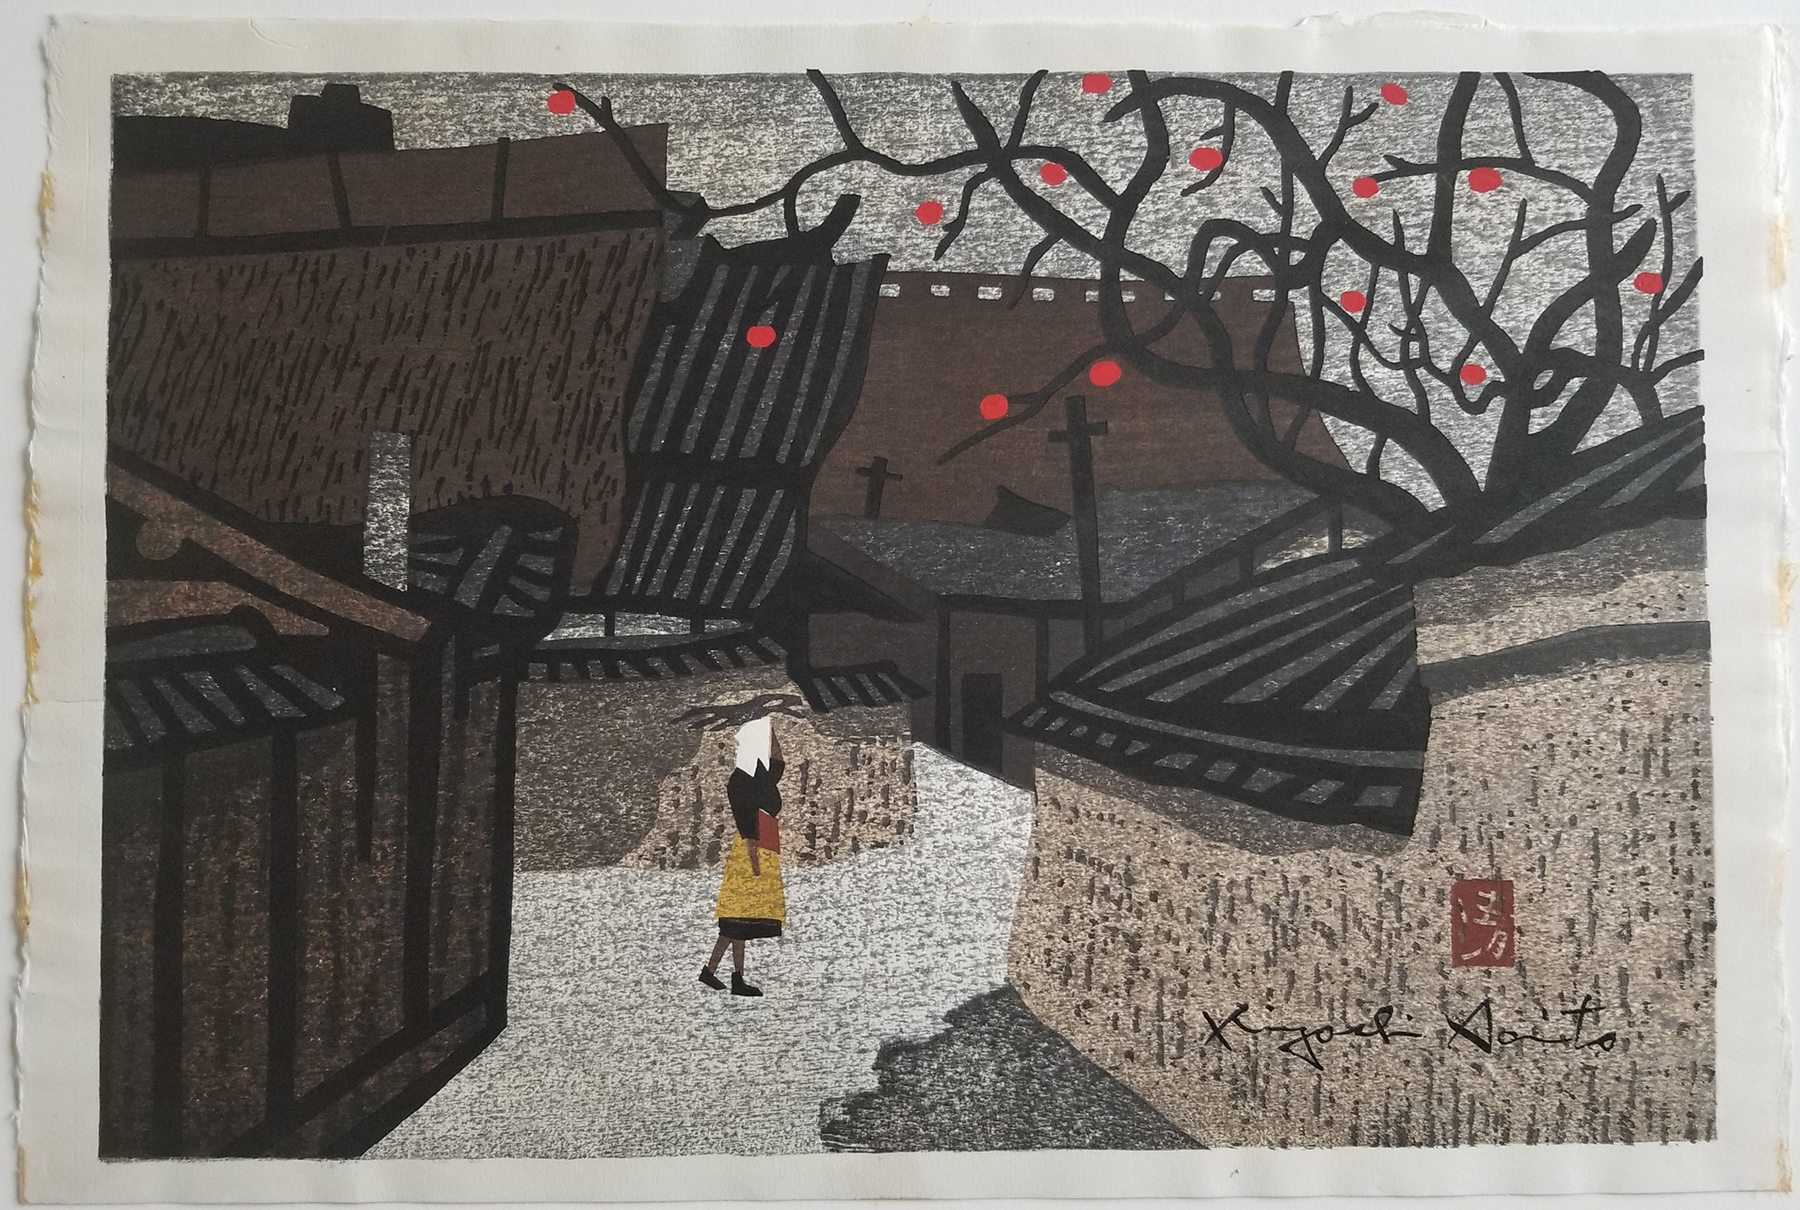 Persimmon Lined Street by Kiyoshi Saito